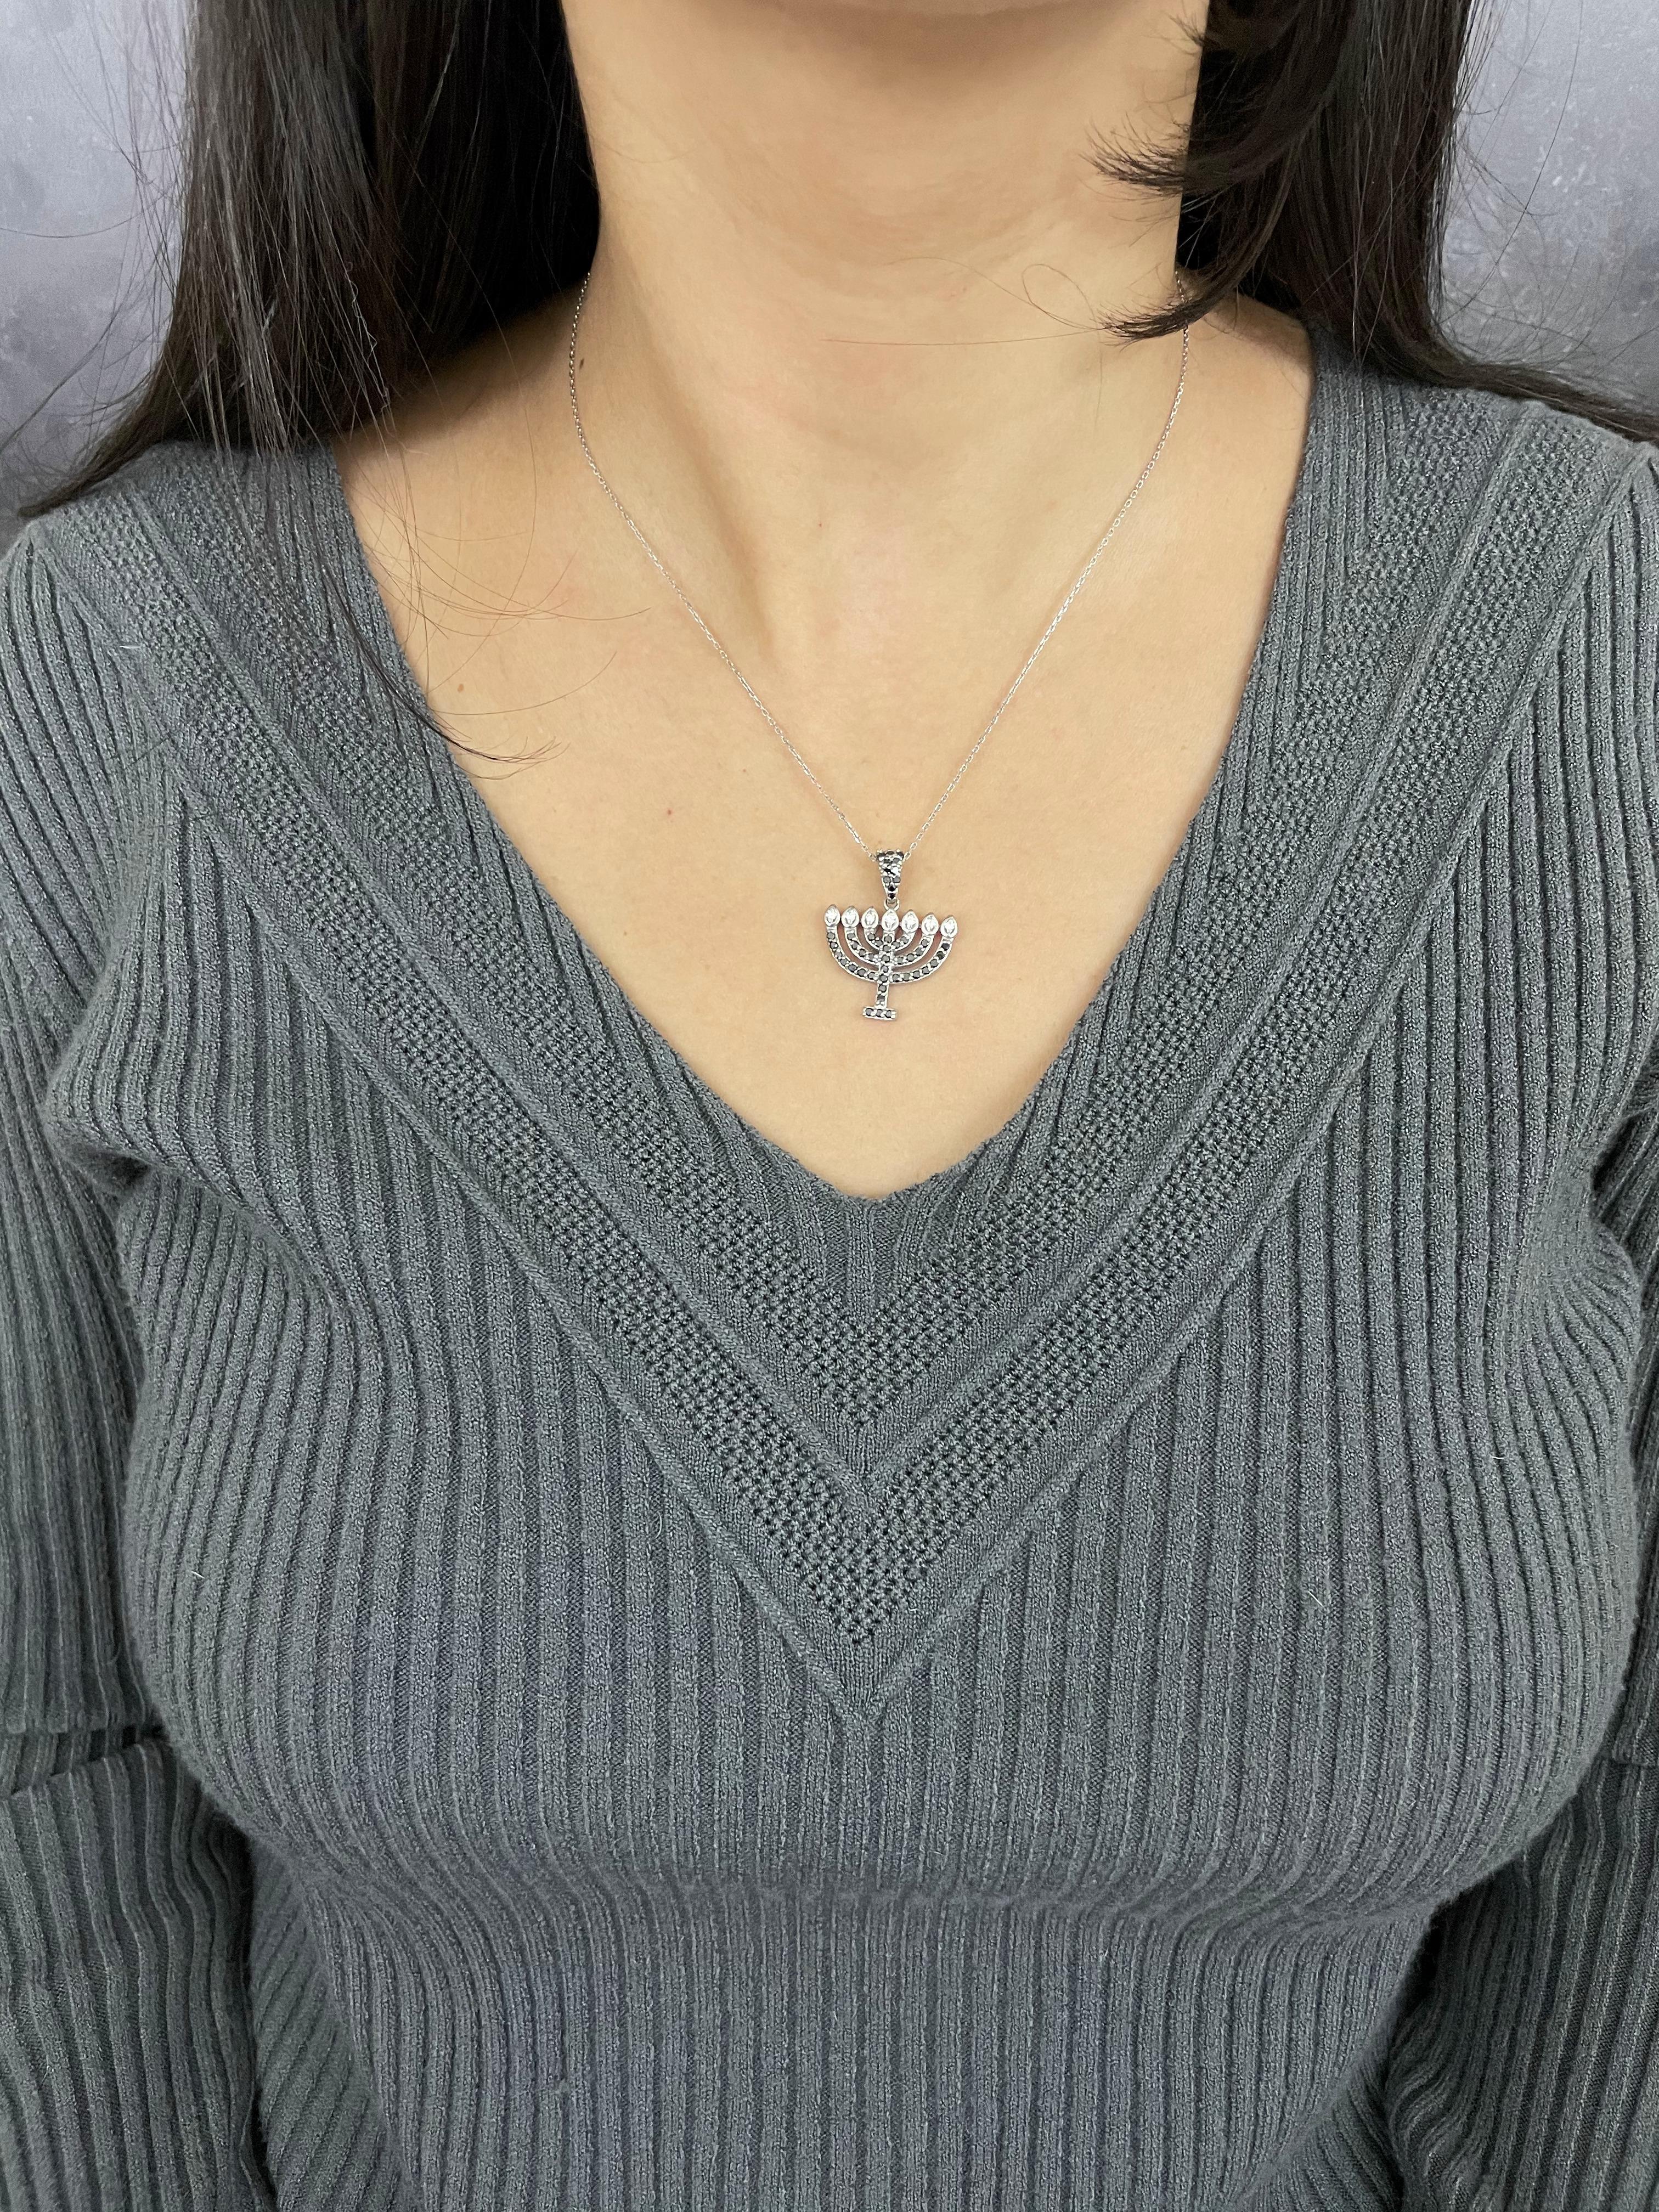 menorah necklace